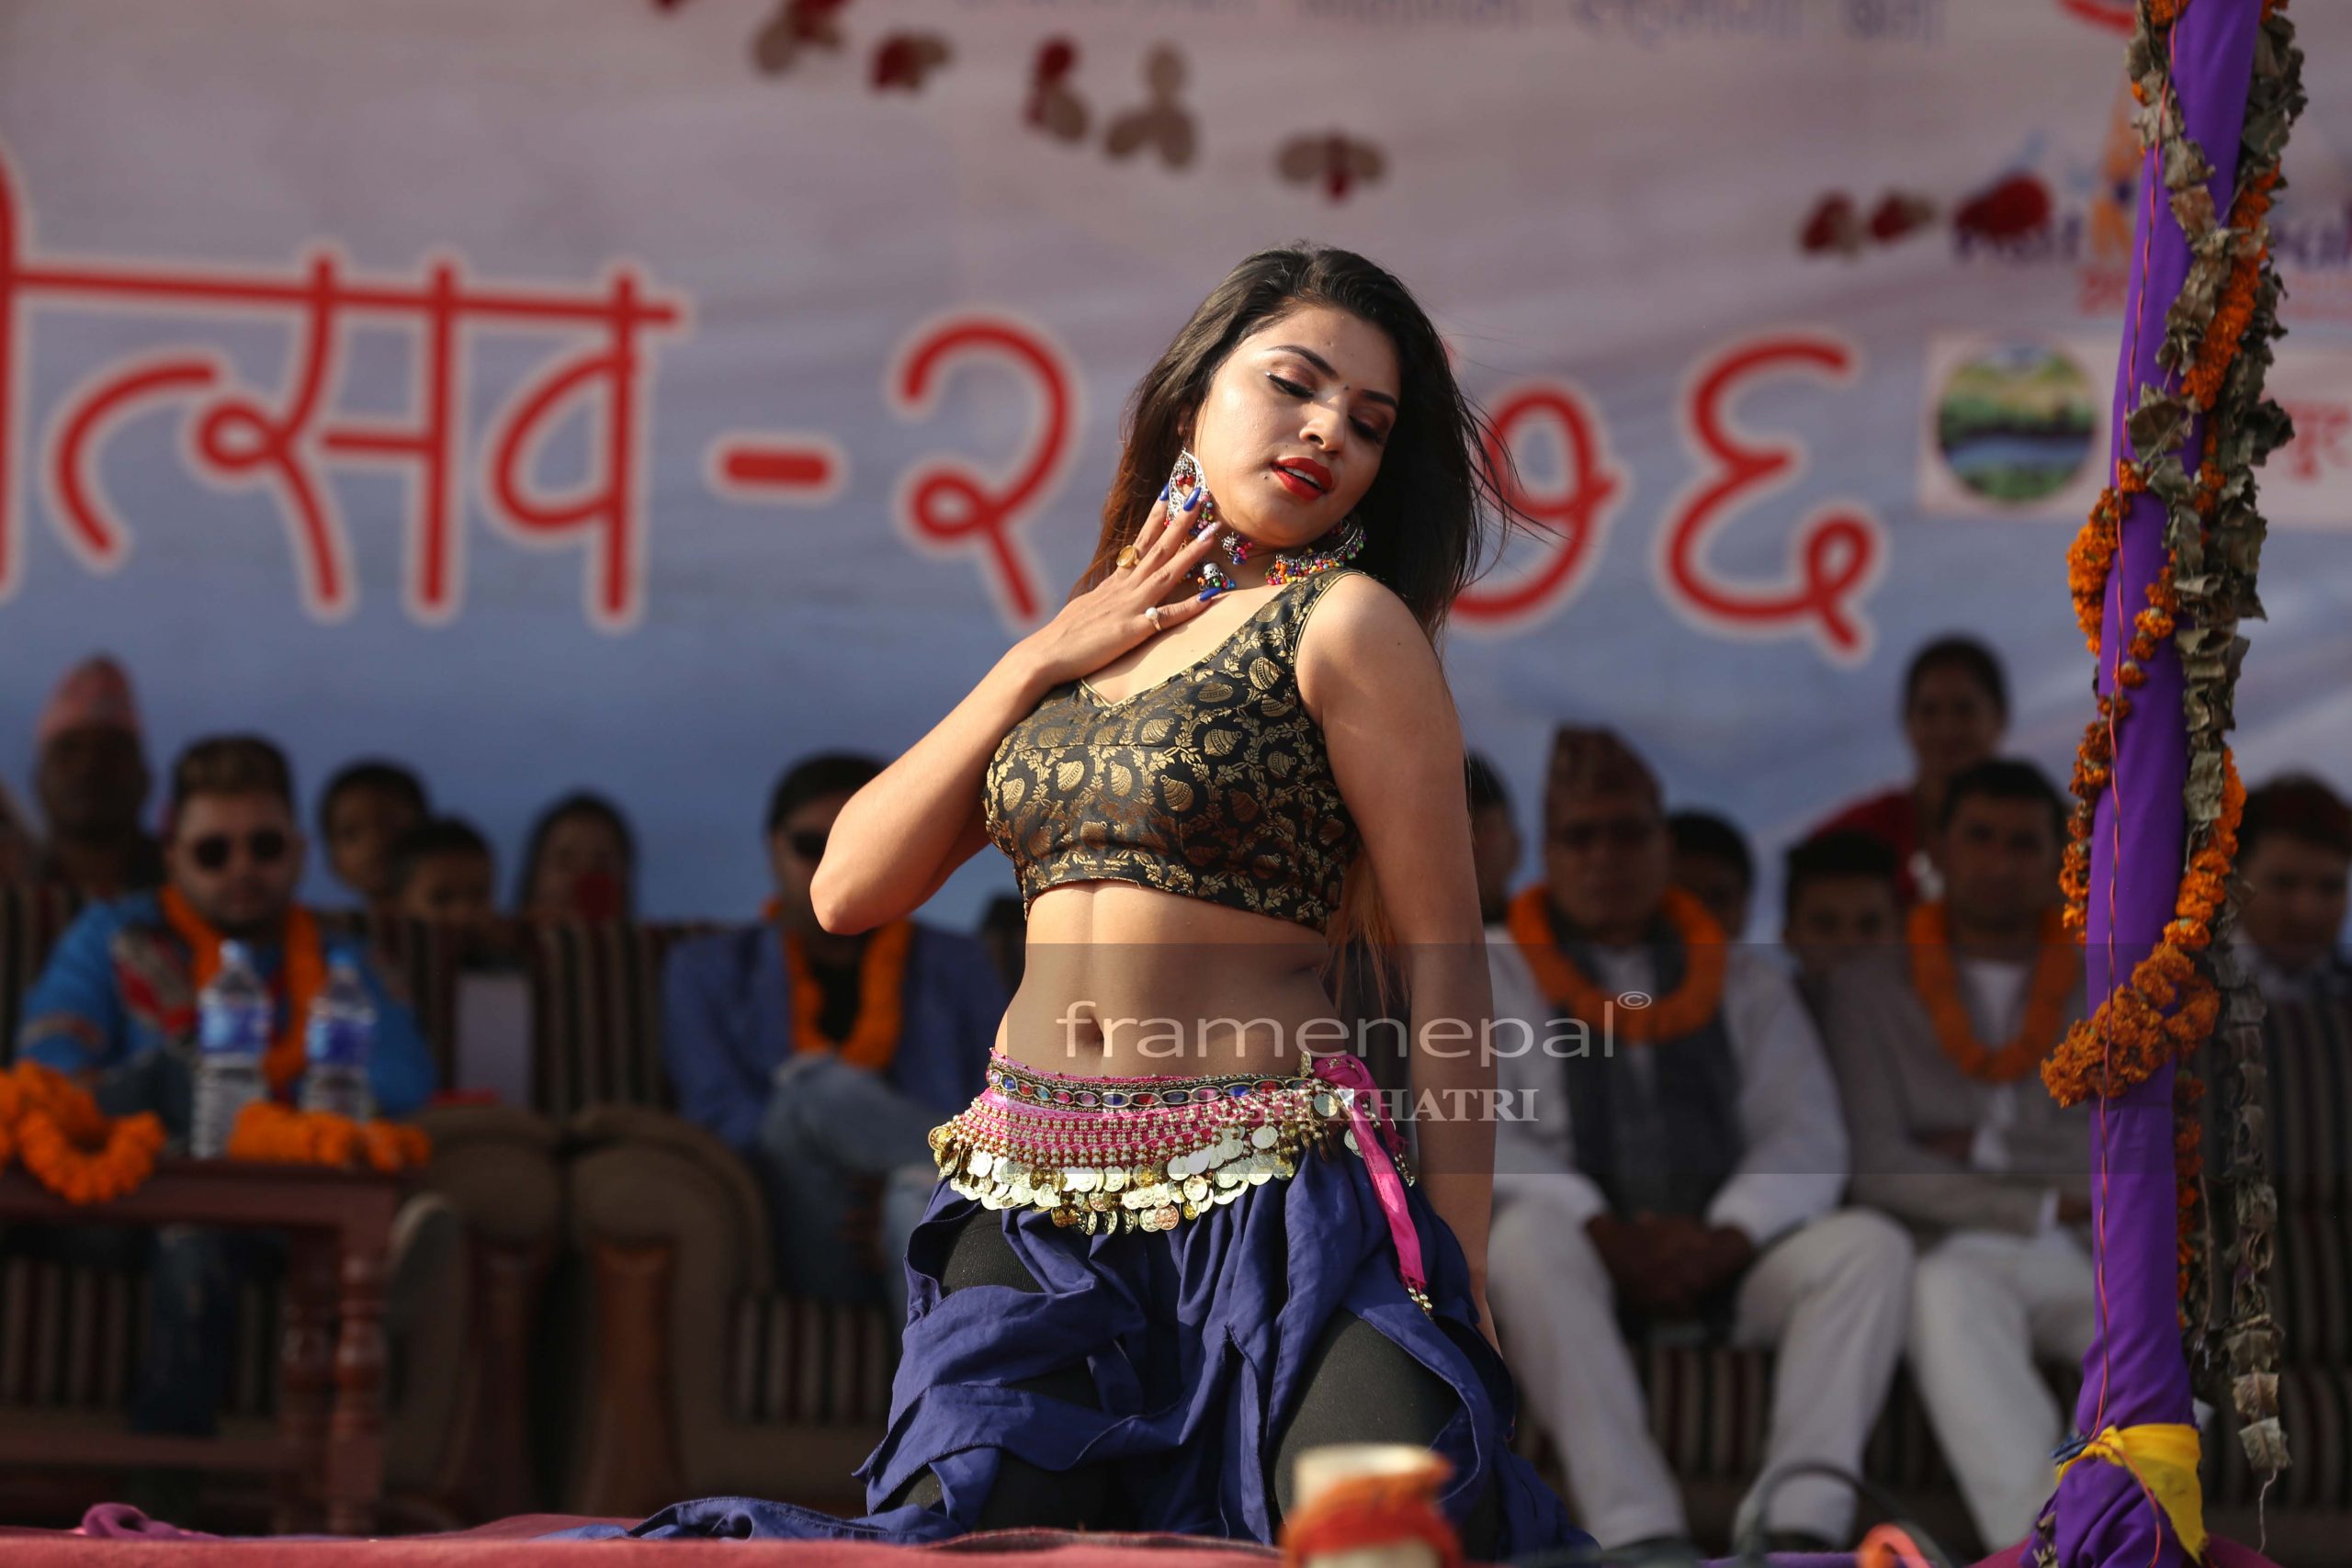 Asmita Puri, Model Dancer Asmita Puri, Best Images for Asmita Puri by frame nepal